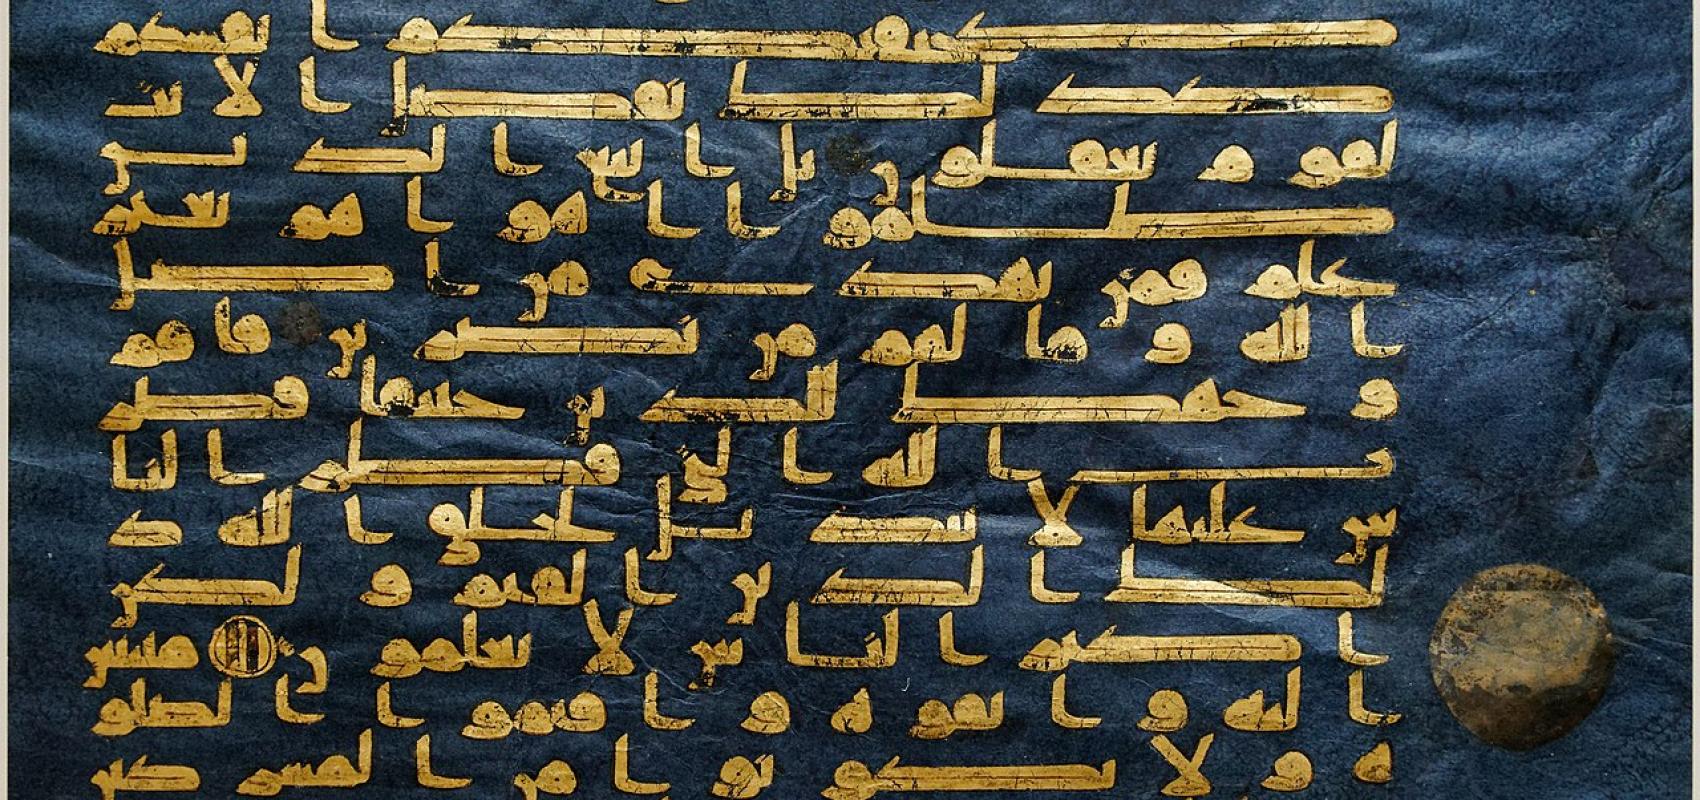 Feuillet du Coran bleu (sourate 30) conservé au Metropolitan Museum of Art de New York -  - DR